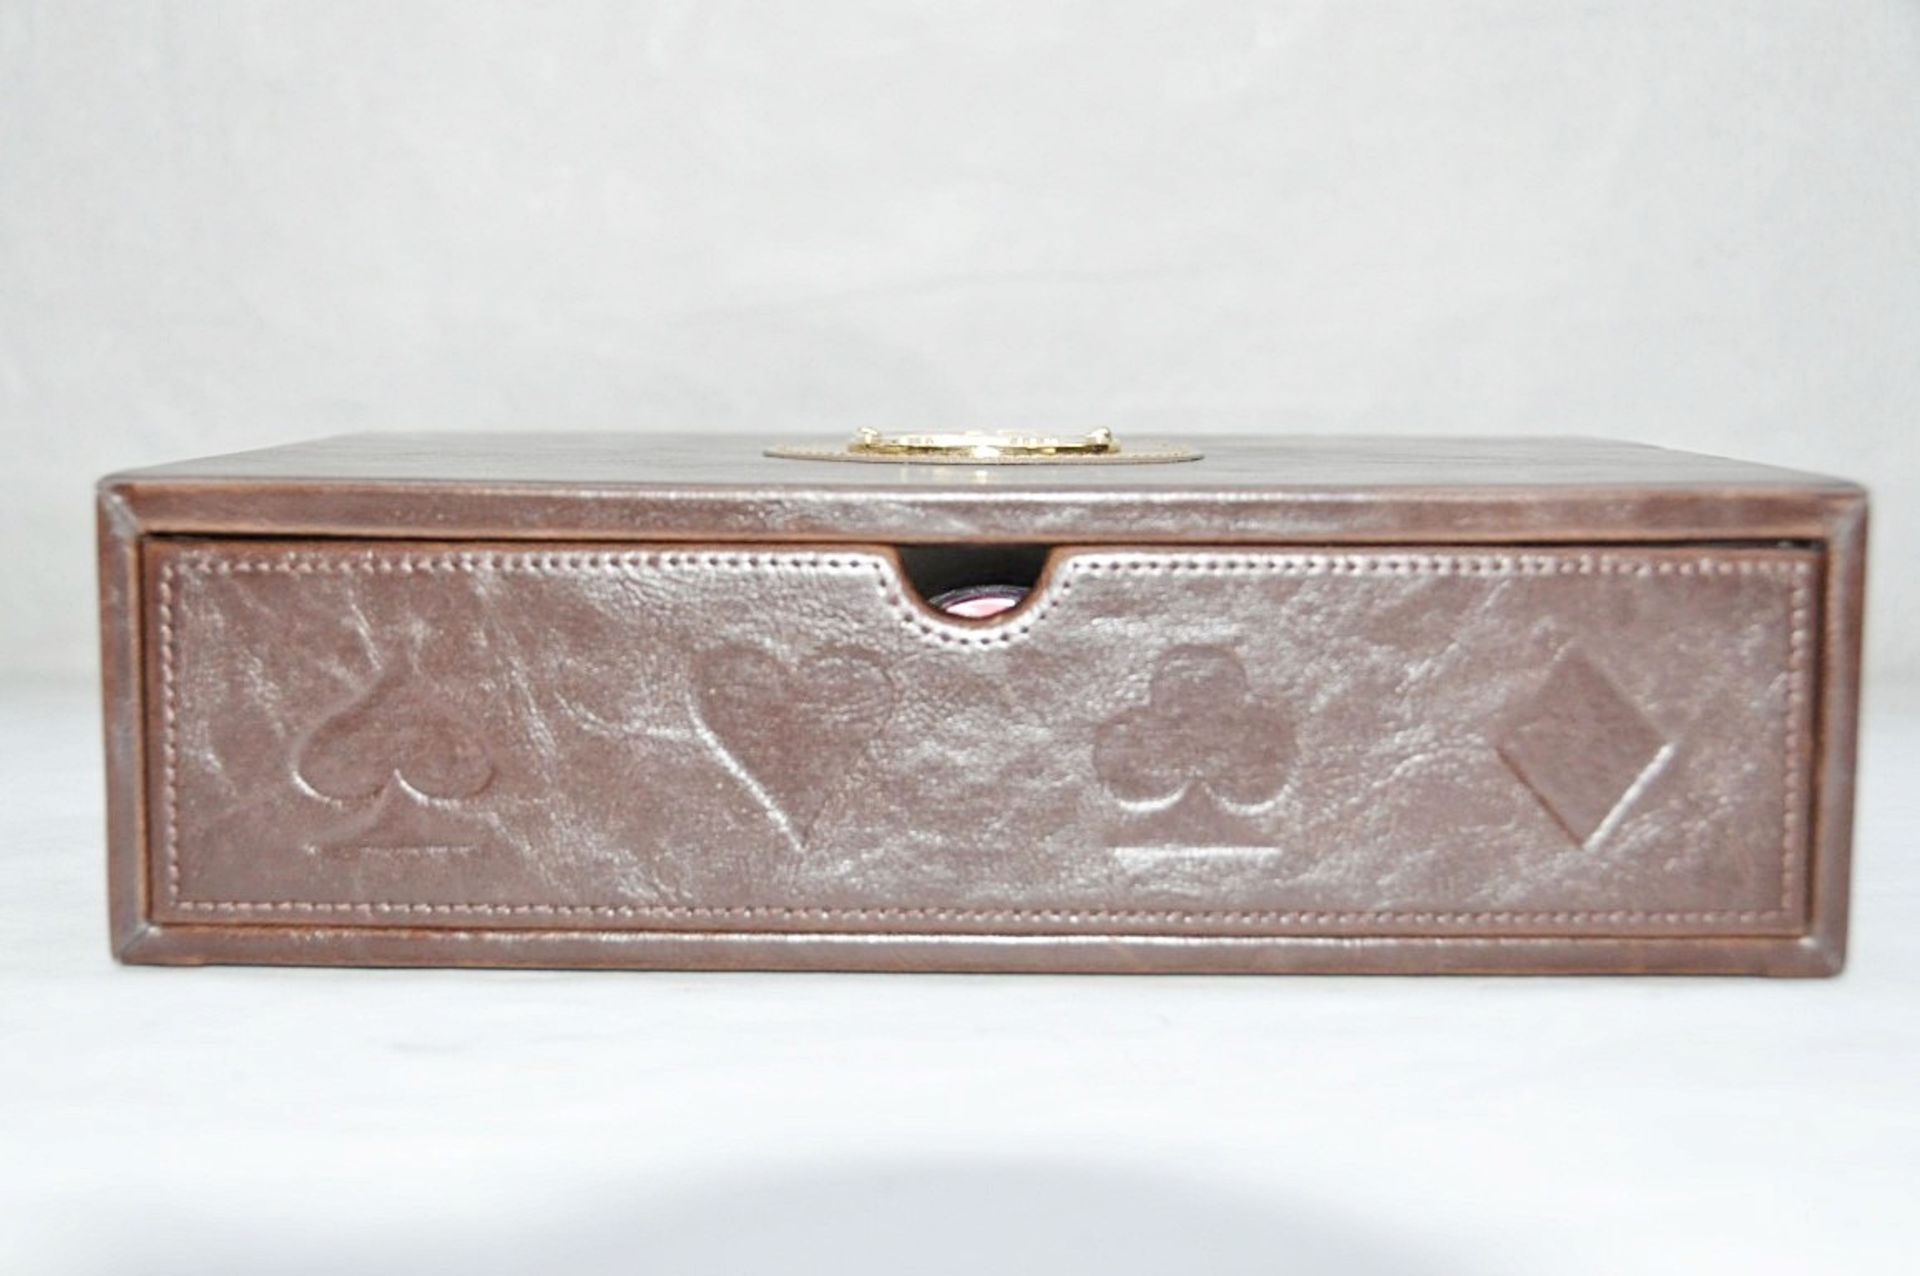 1 x "AB Collezioni" Italian Genuine Leather-Bound Luxury POKER SET (34048) - Features Beautiful - Image 6 of 8